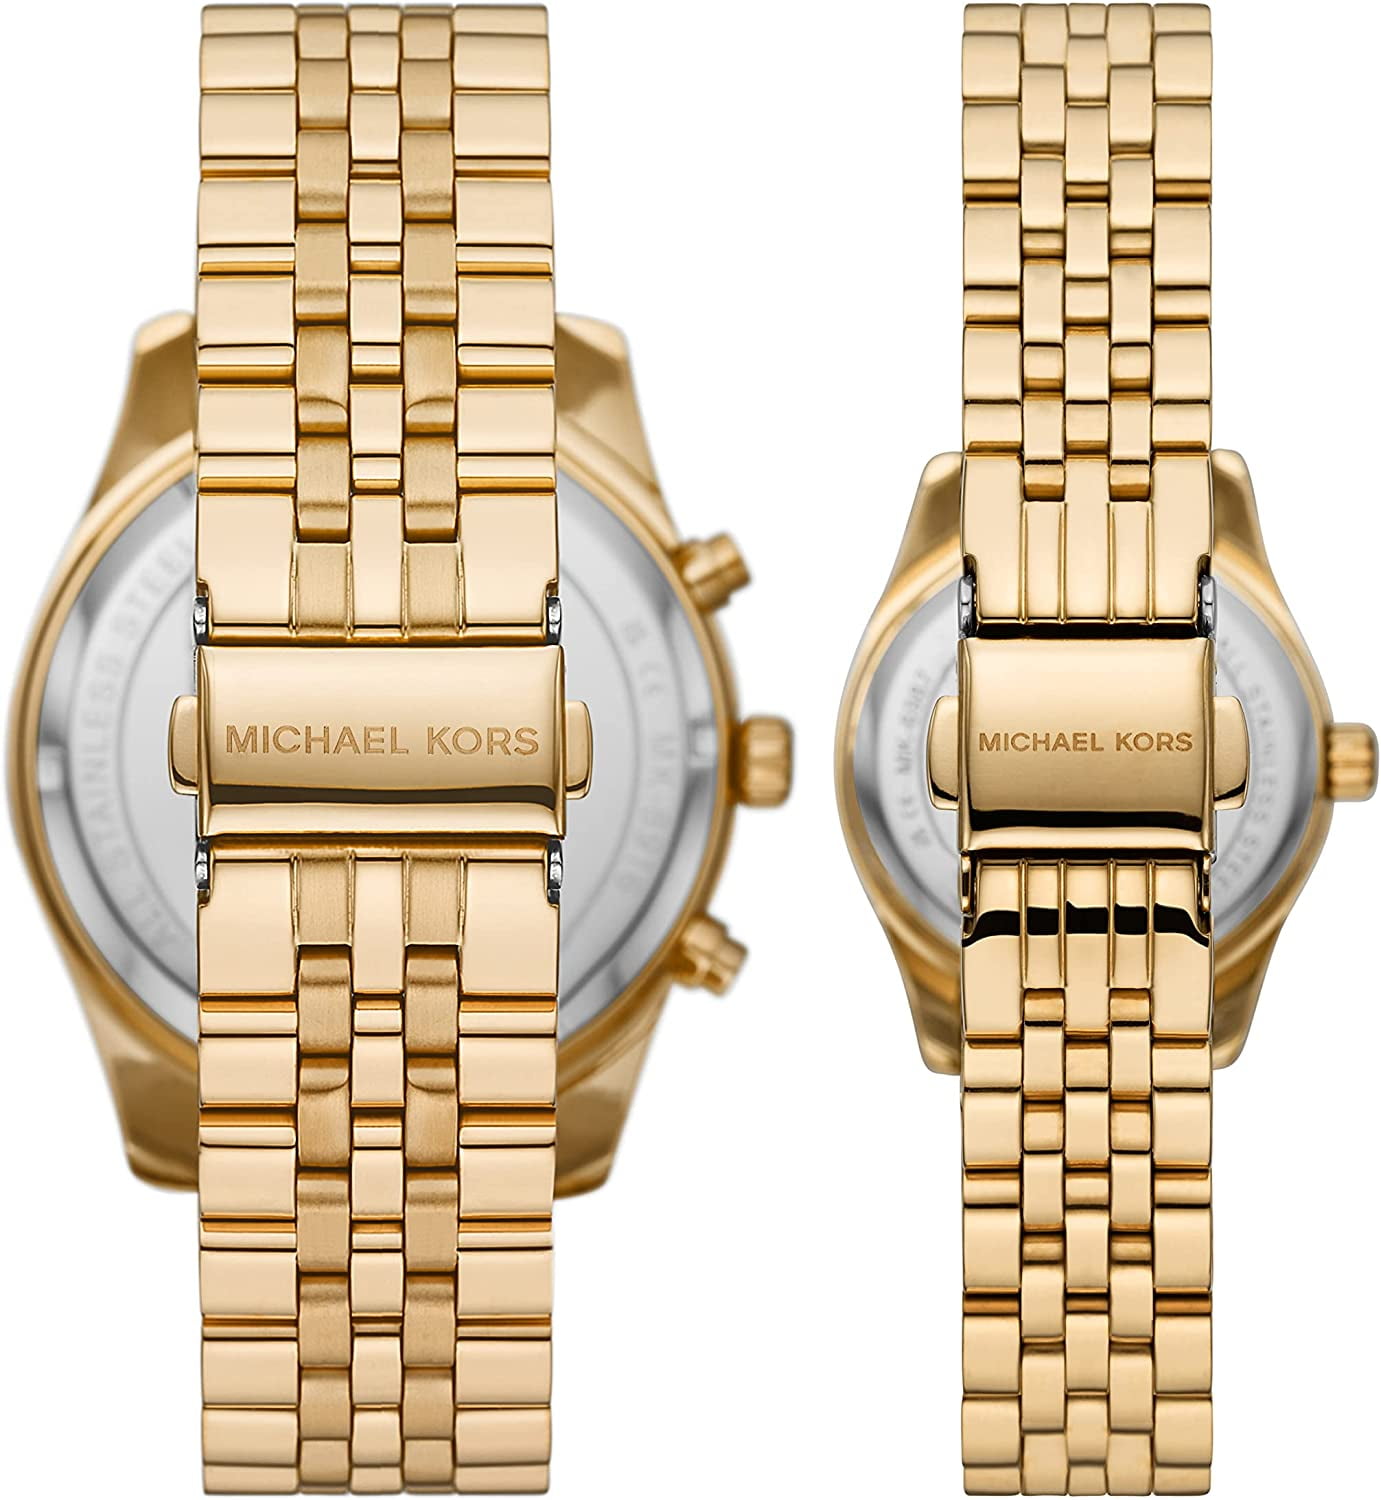 Amazoncom Michael Kors Womens Bradshaw GoldTone Watch MK5605  Michael  Kors Clothing Shoes  Jewelry